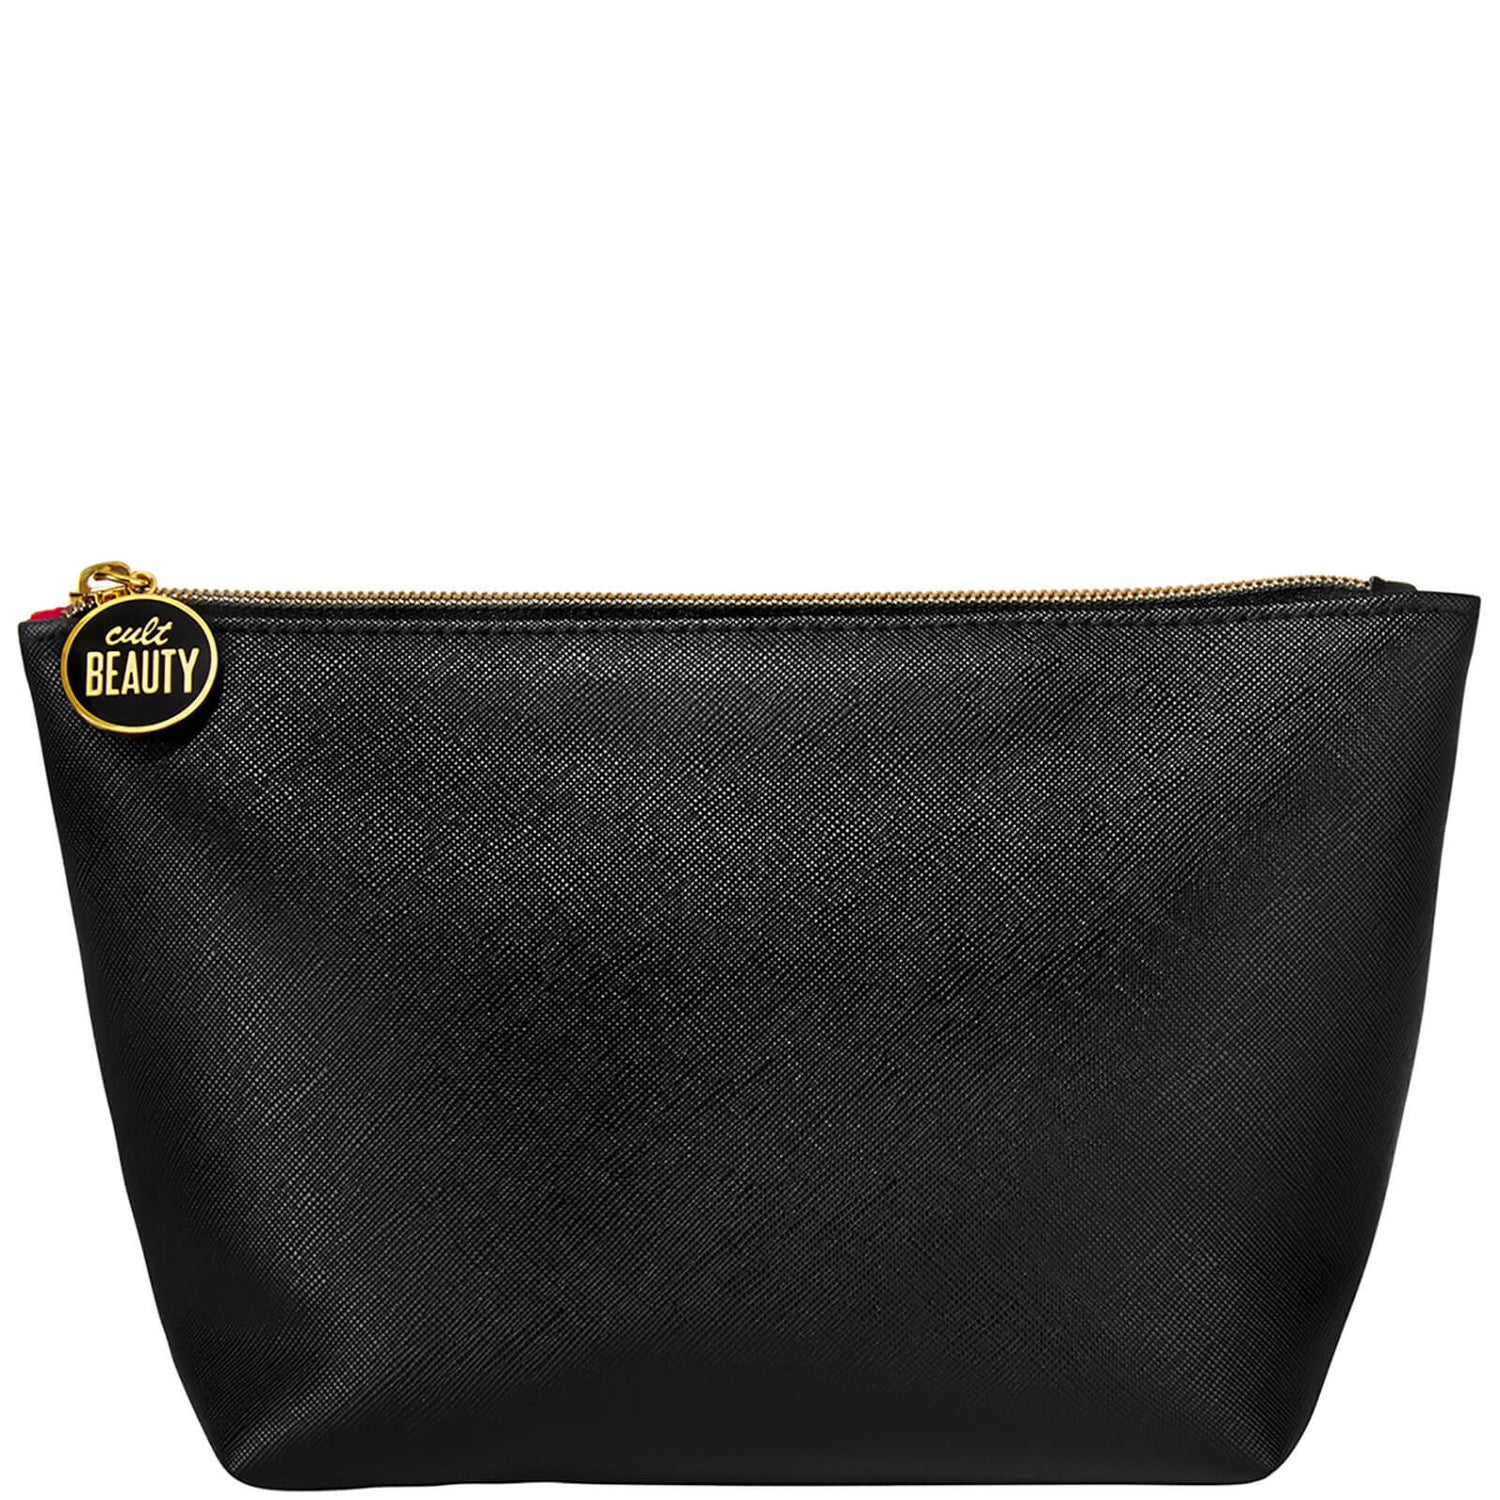 Cult Beauty Black Faux Leather Make Up Bag